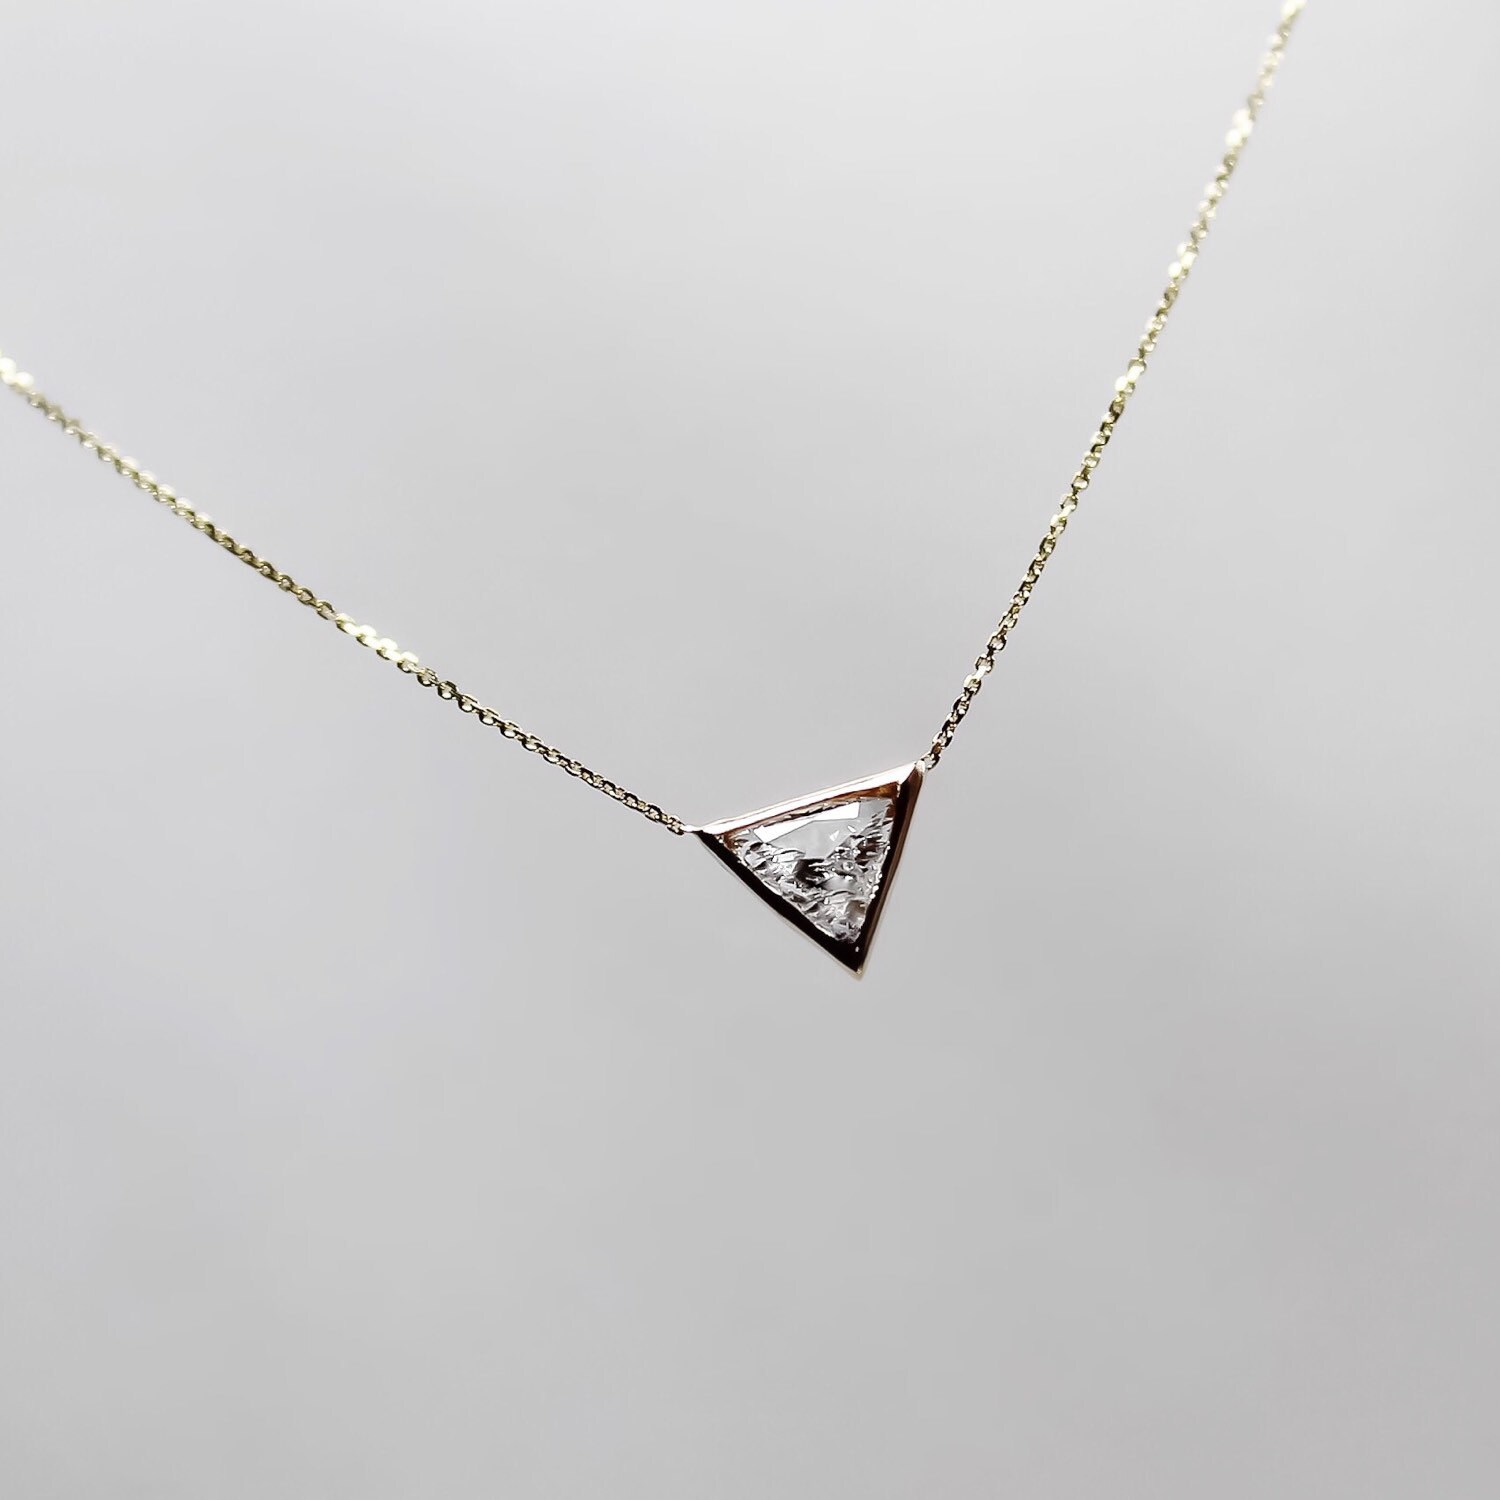 14k Gold .50 Carat Triangle Cut Diamond Necklace - Etsy